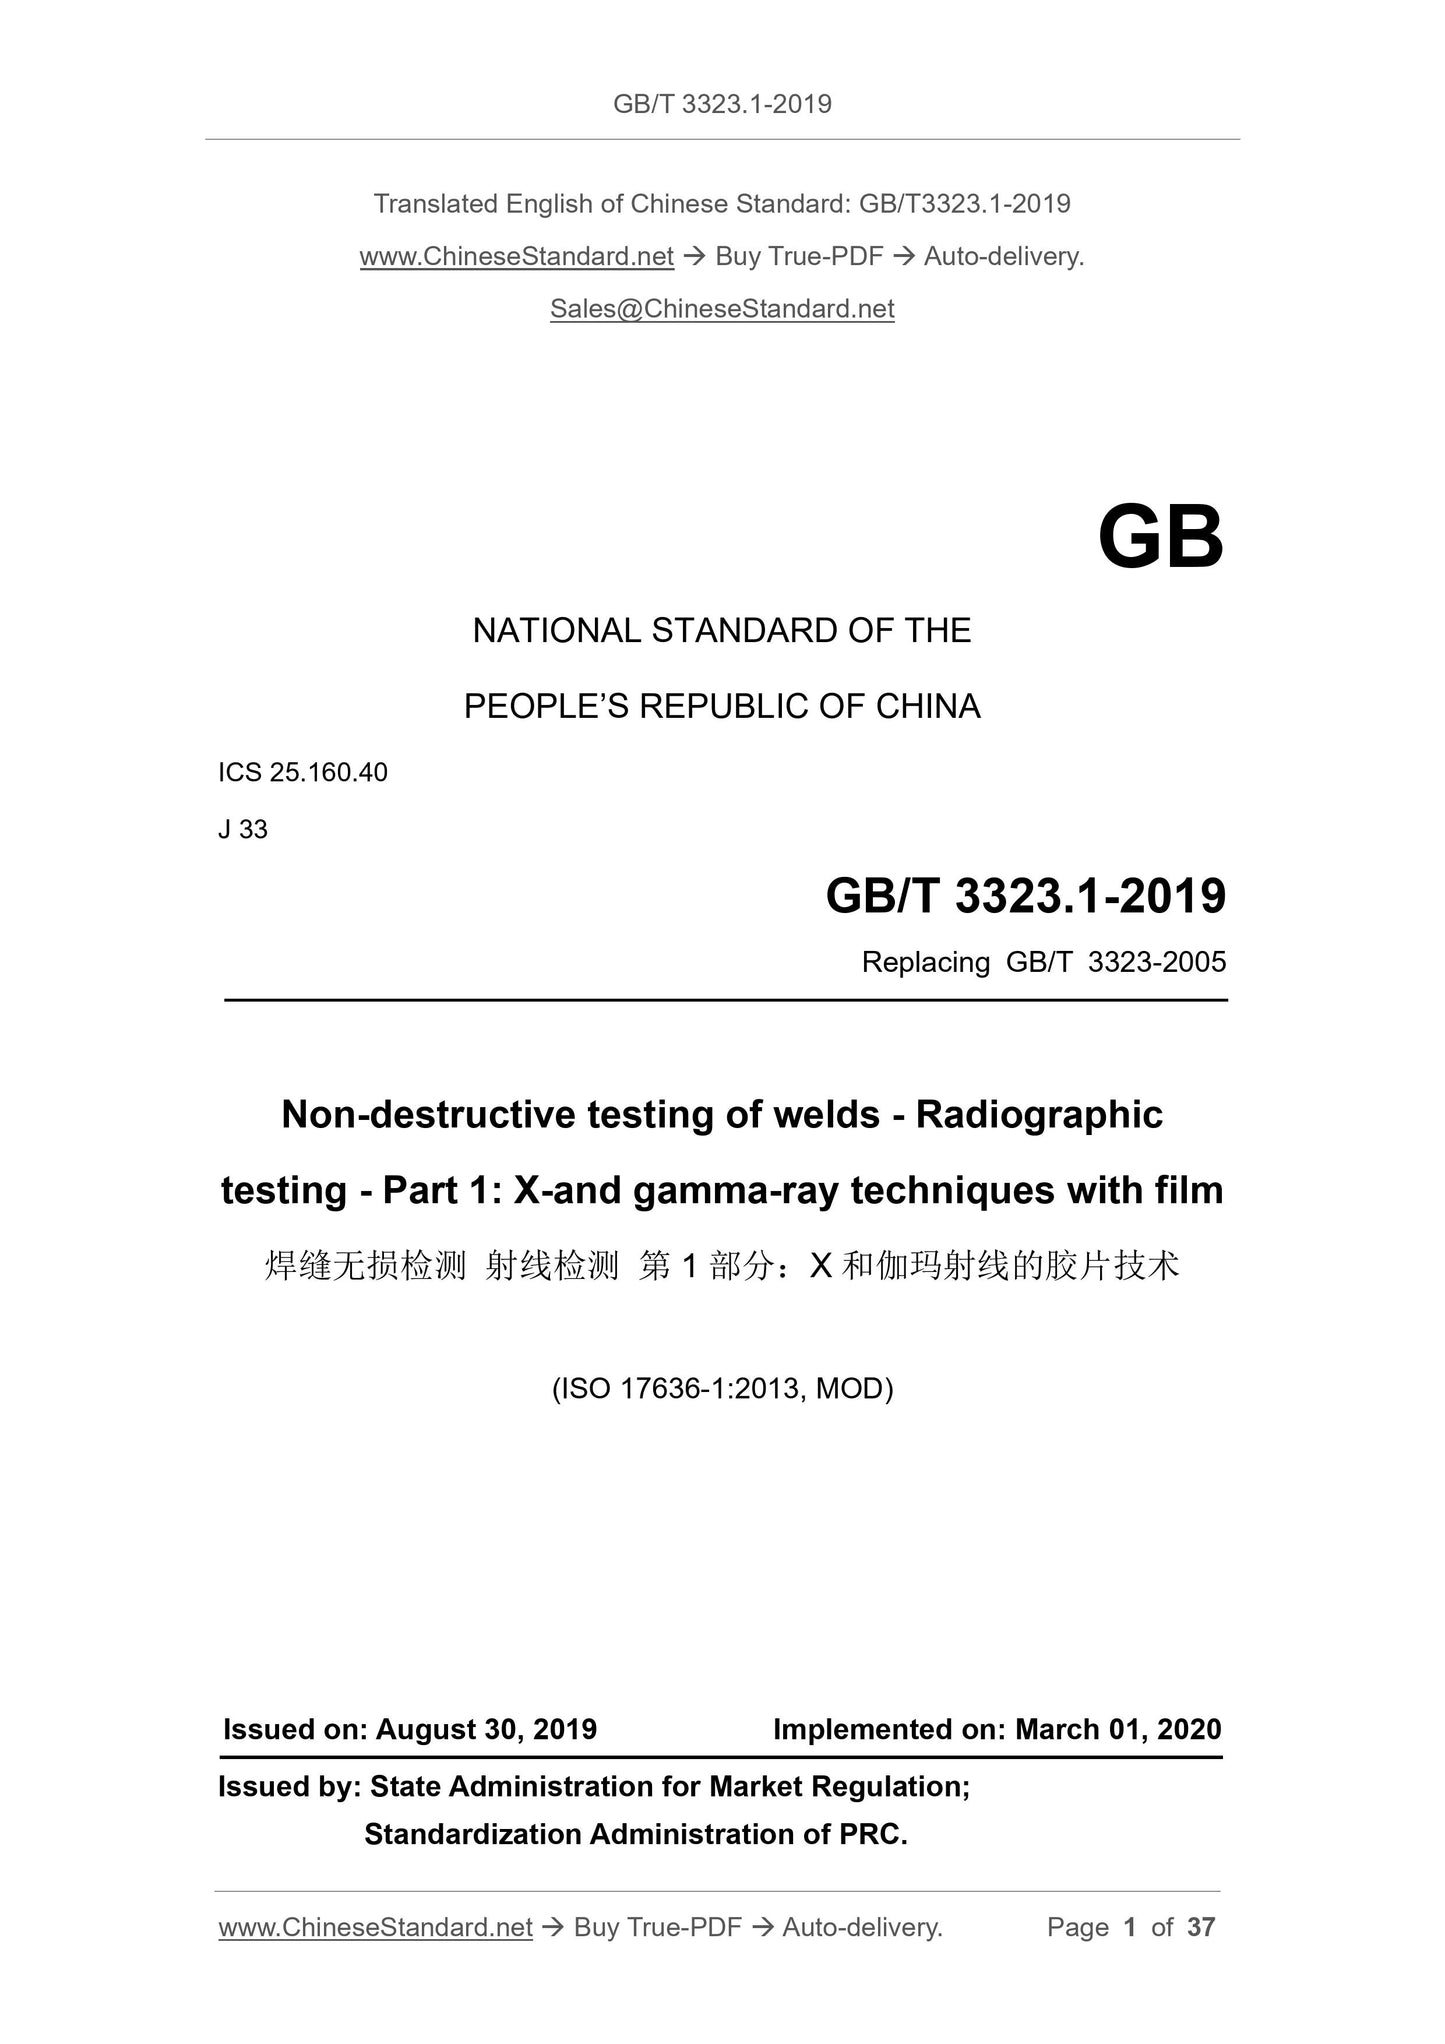 GB/T 3323.1-2019 English PDF (GBT3323.1-2019)